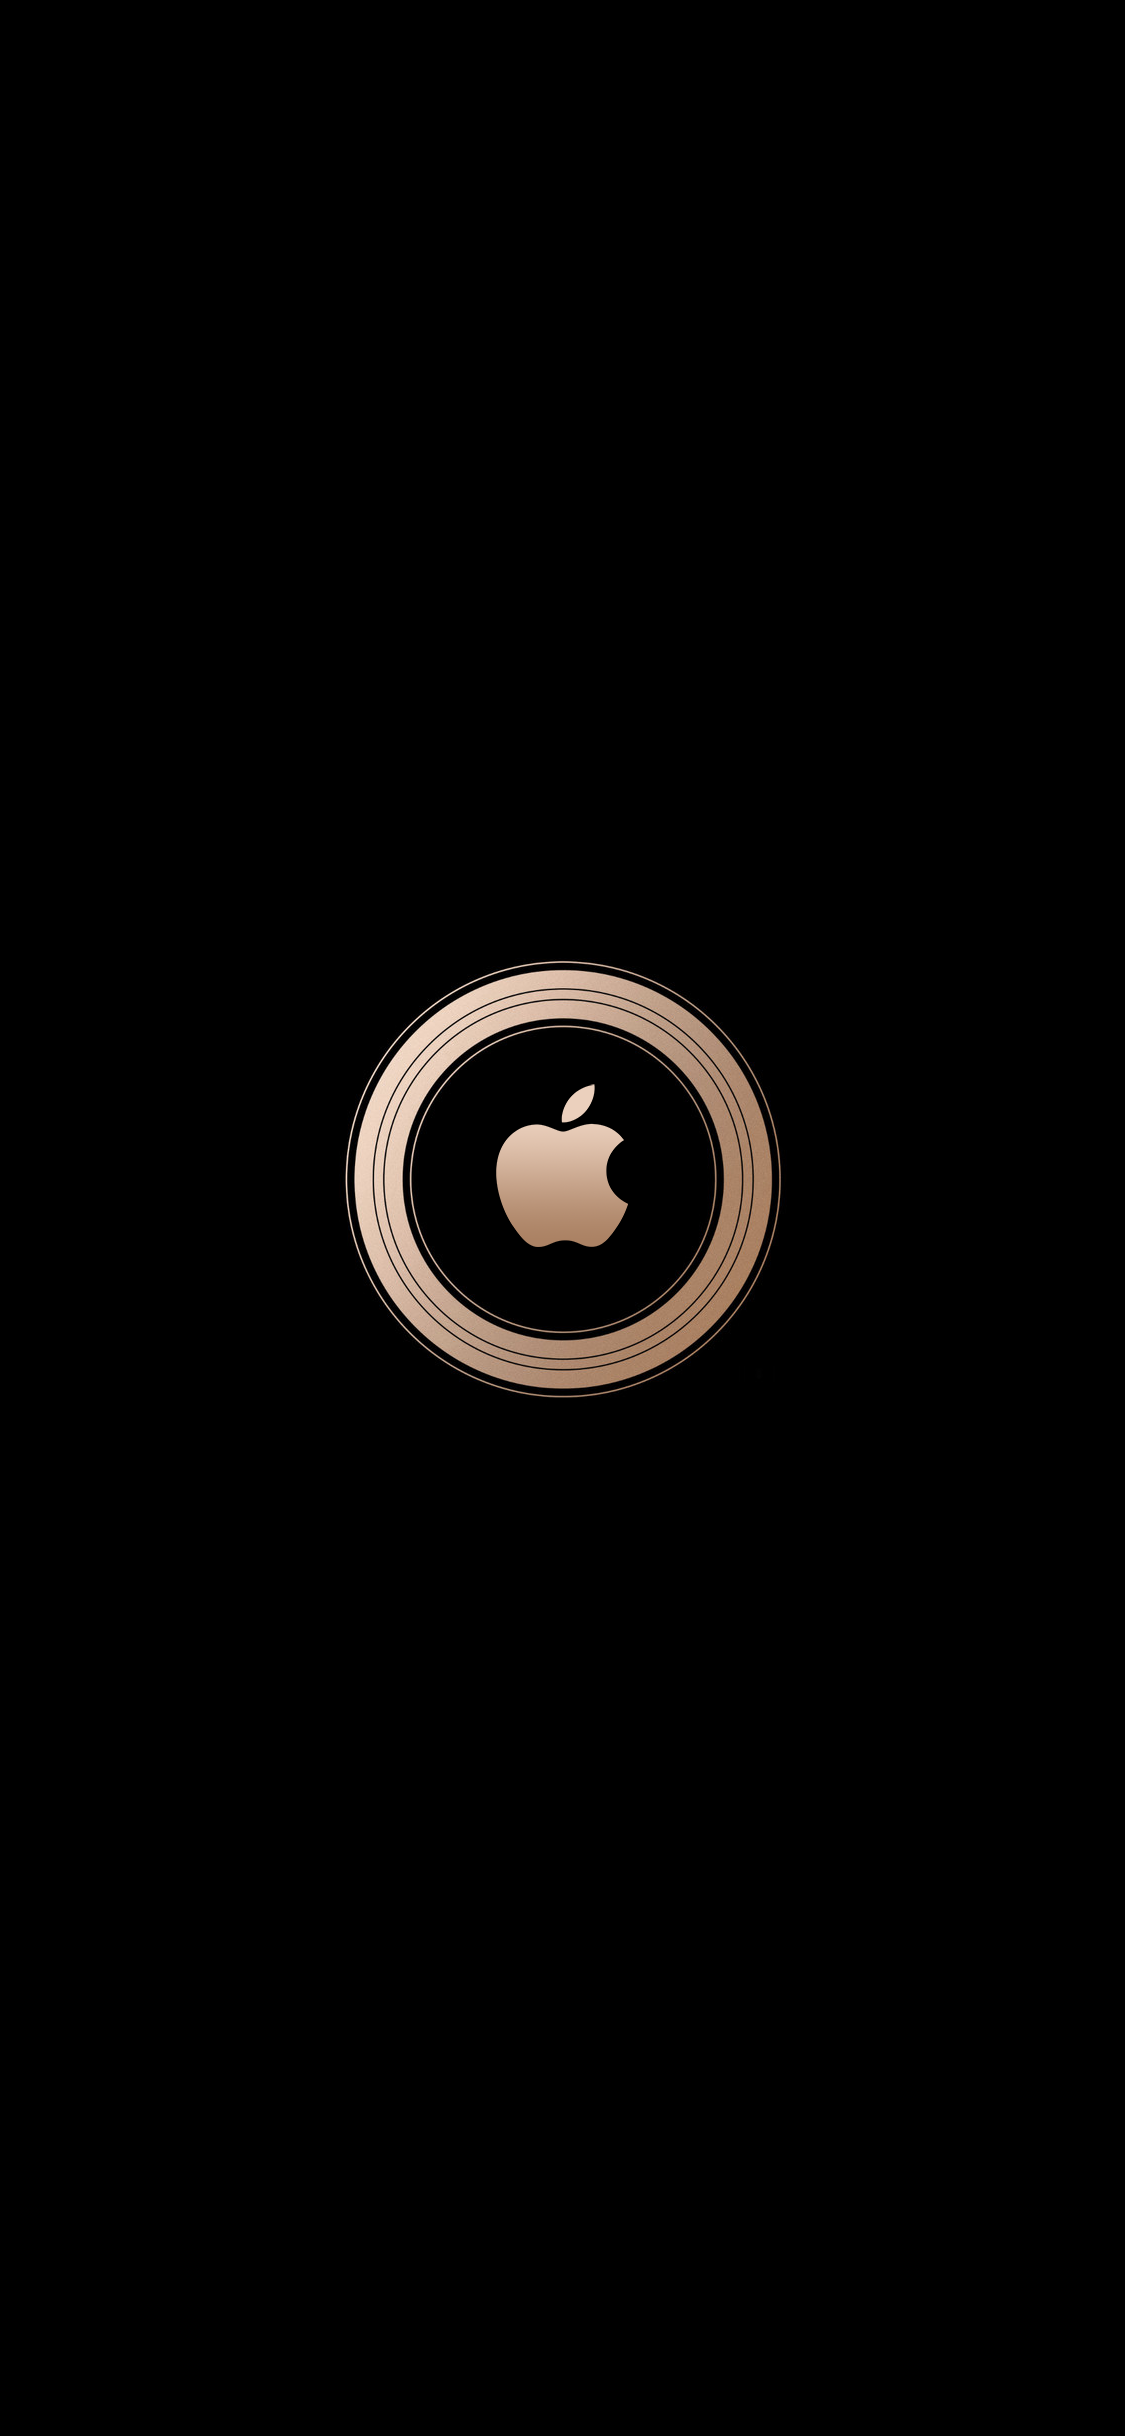 今週の壁紙 特別版 一緒に Iphone Ipad Mac Apple Watch